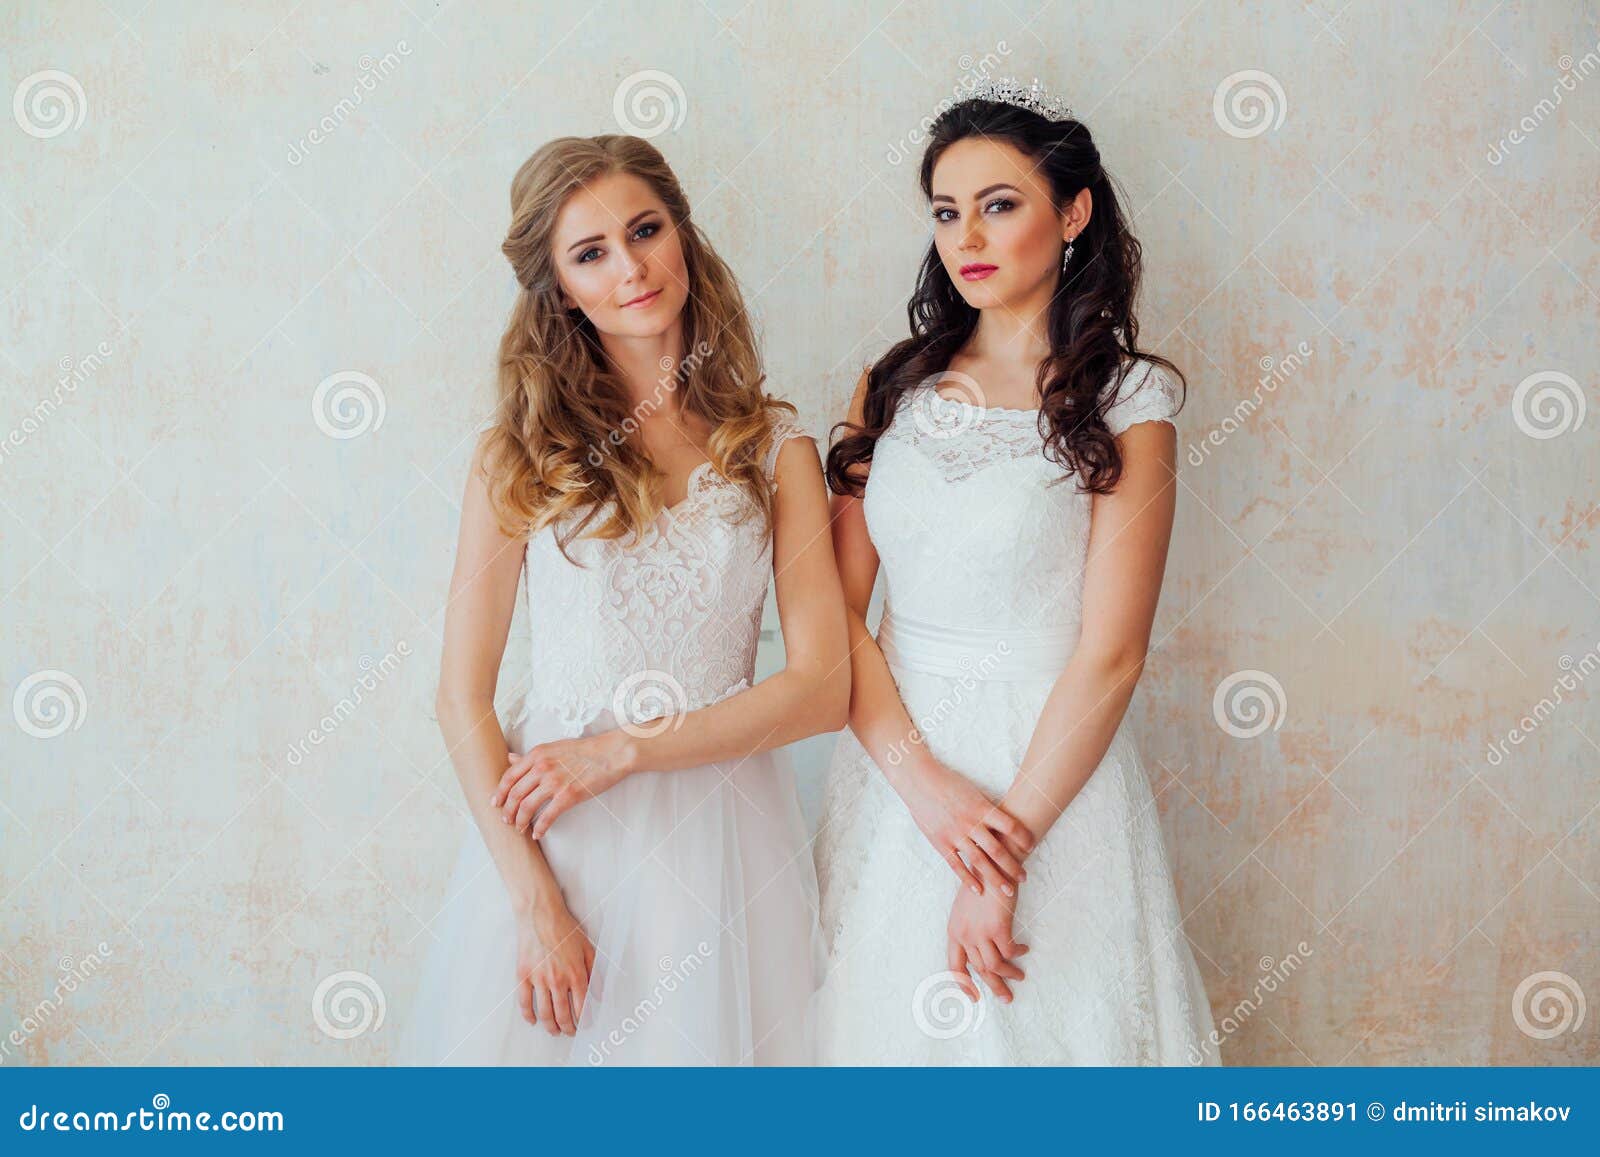 Two Brides in Wedding Dresses Wedding Blonde Brunette Stock Image ...